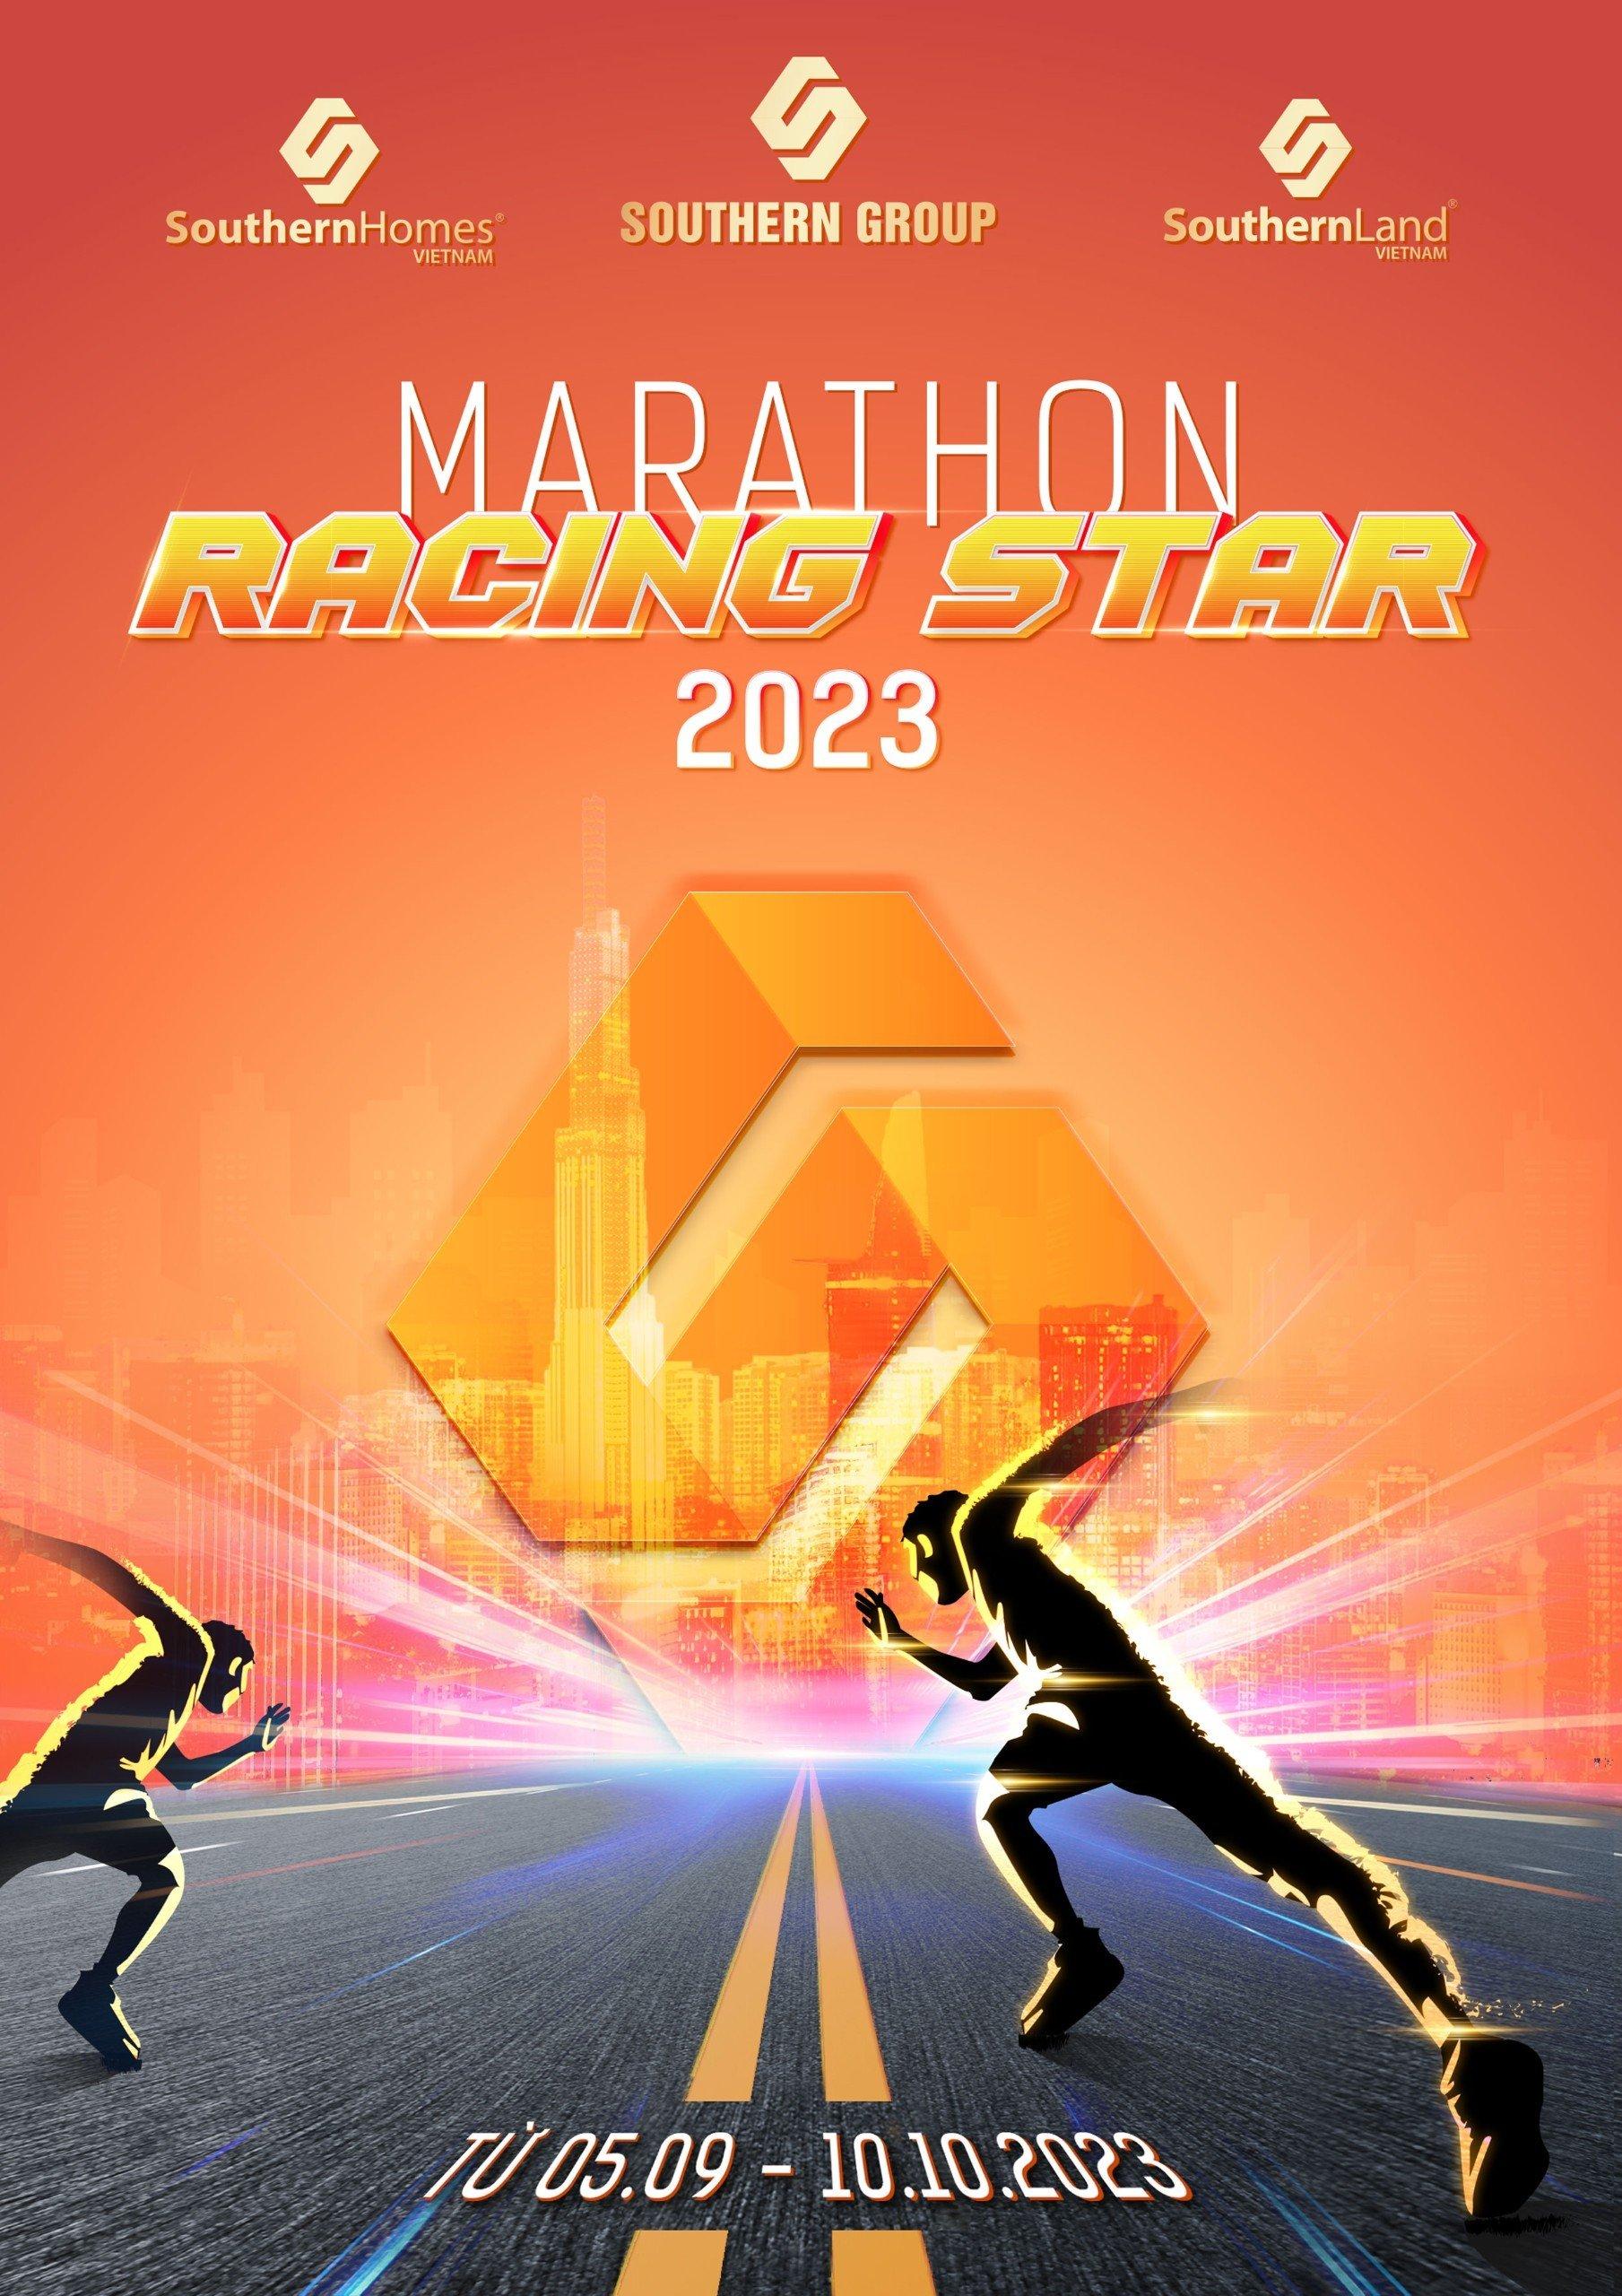 SOUTHERN GROUP - MARATHON RACING STAR 2023